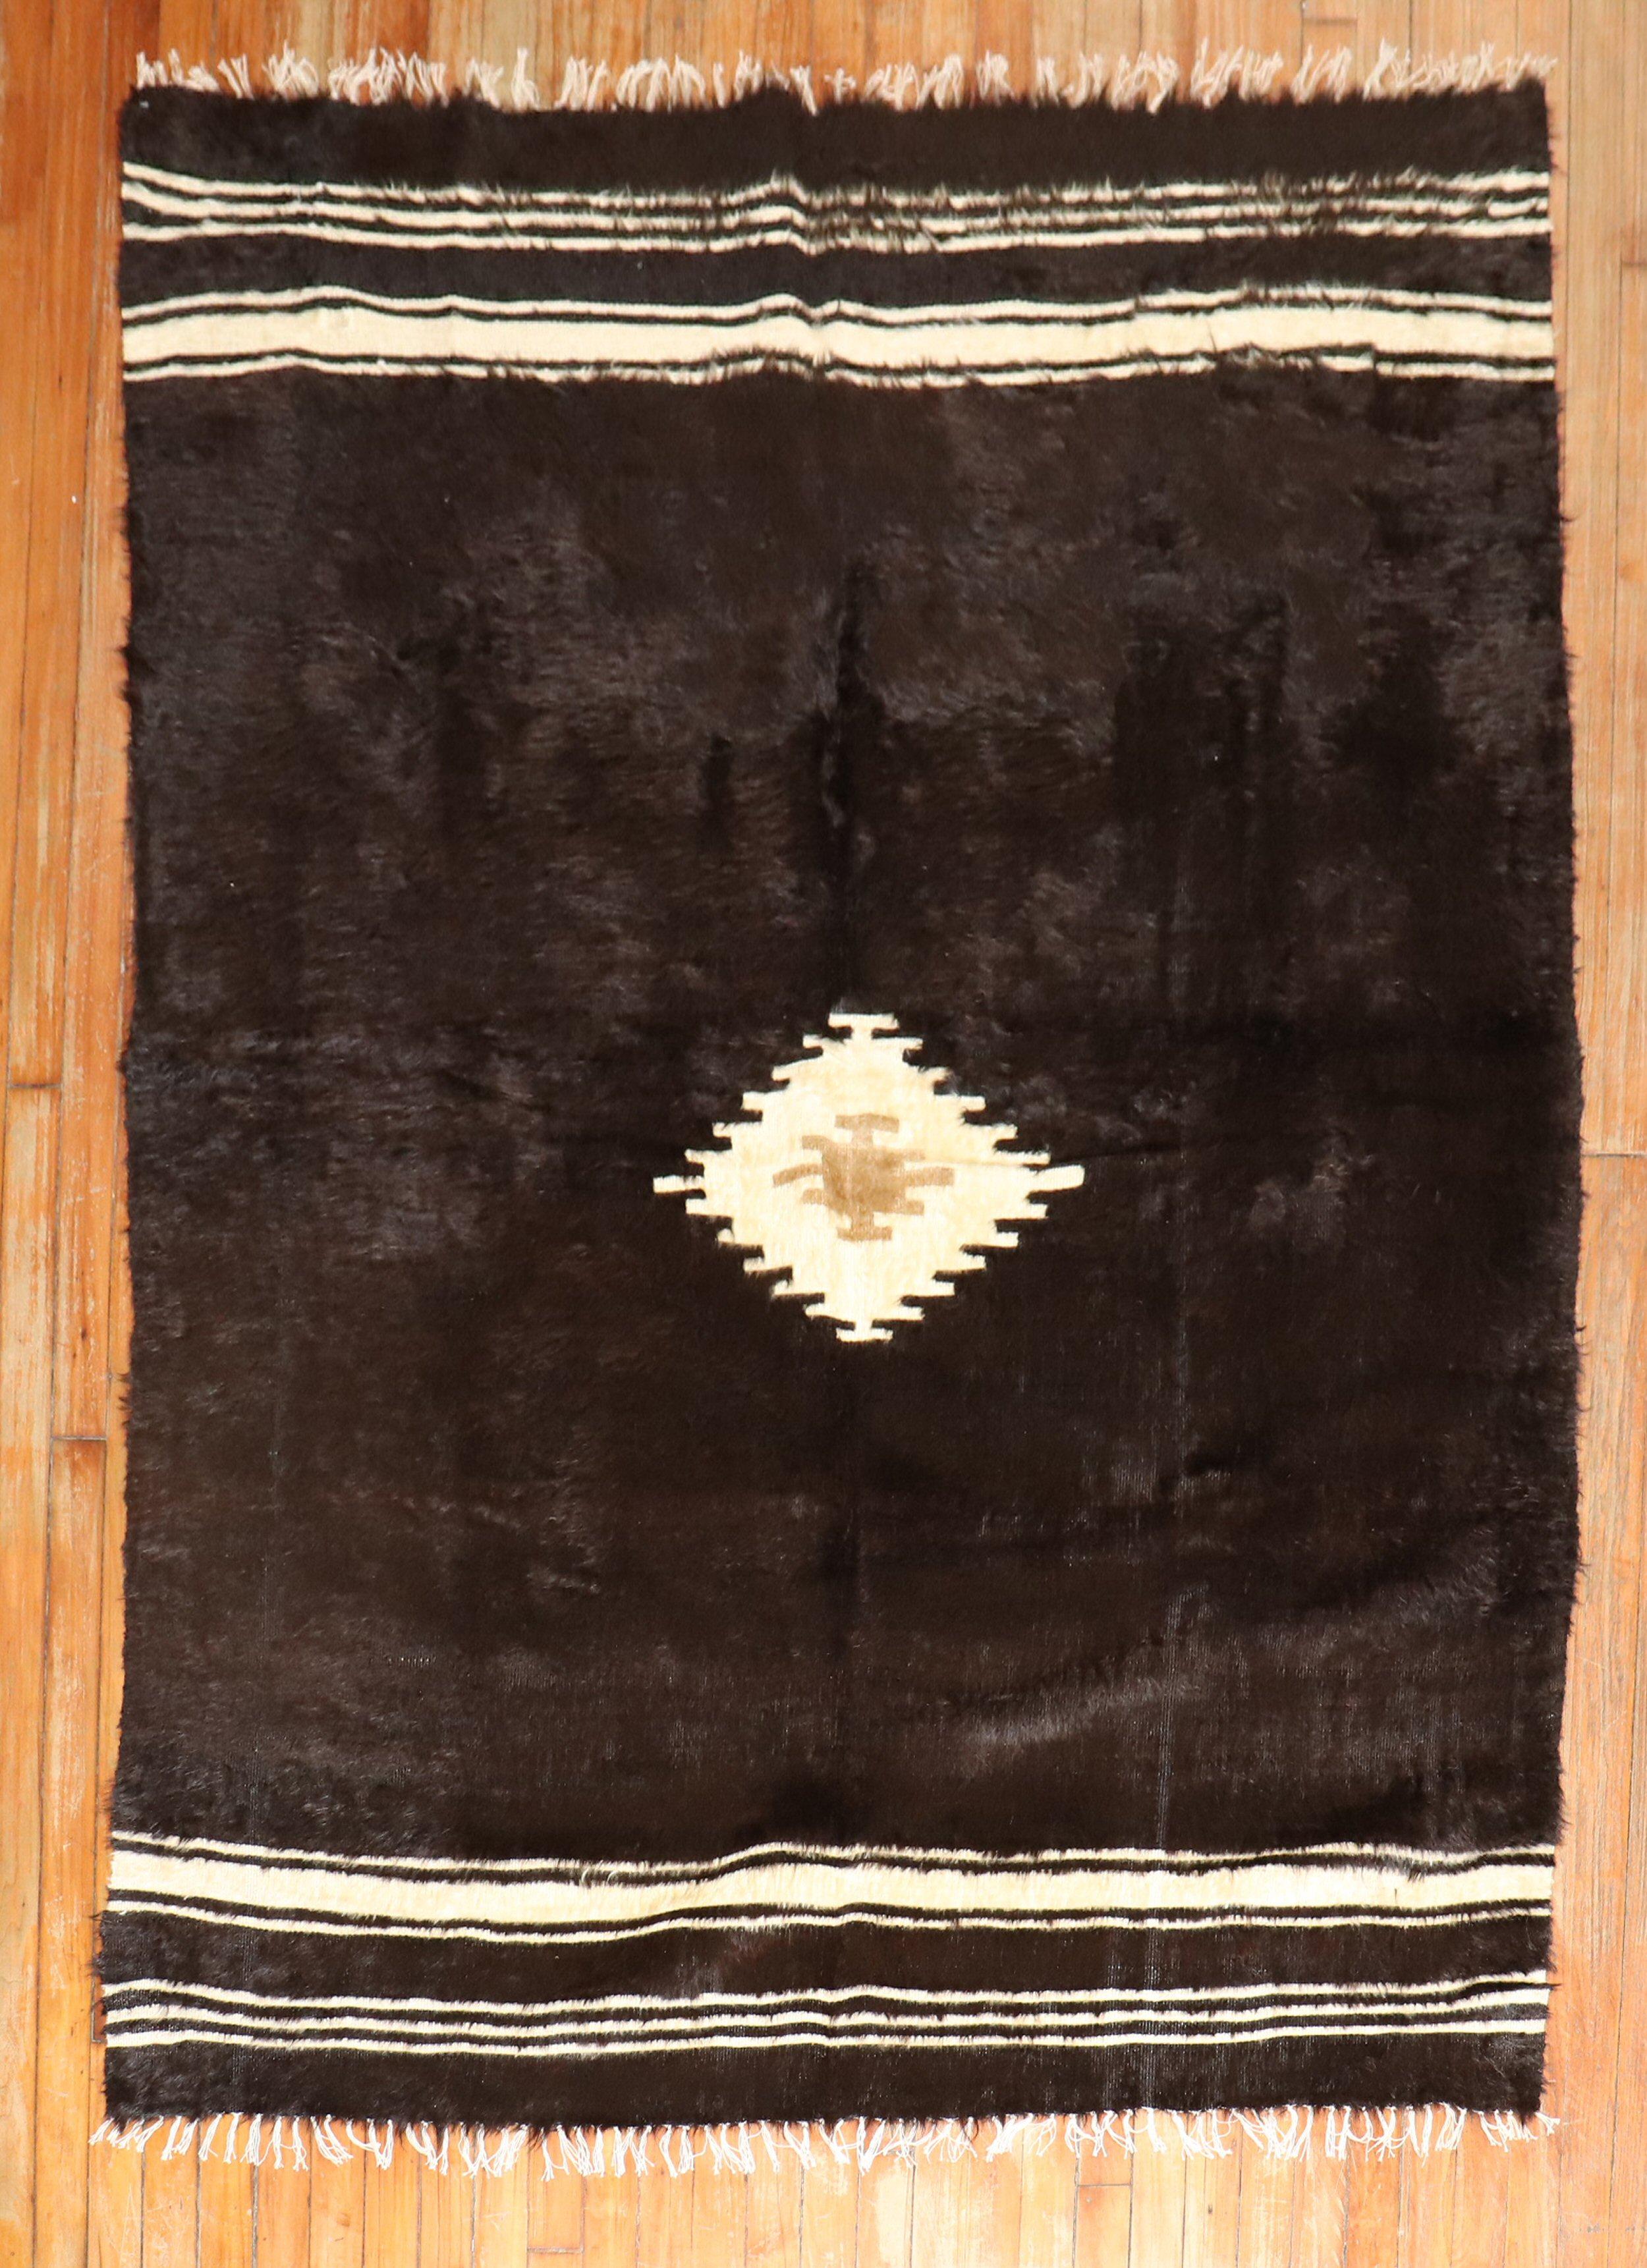 Vintage Angora mohair wool rug in black and ivory.

Measures: 5' x 6'7''.